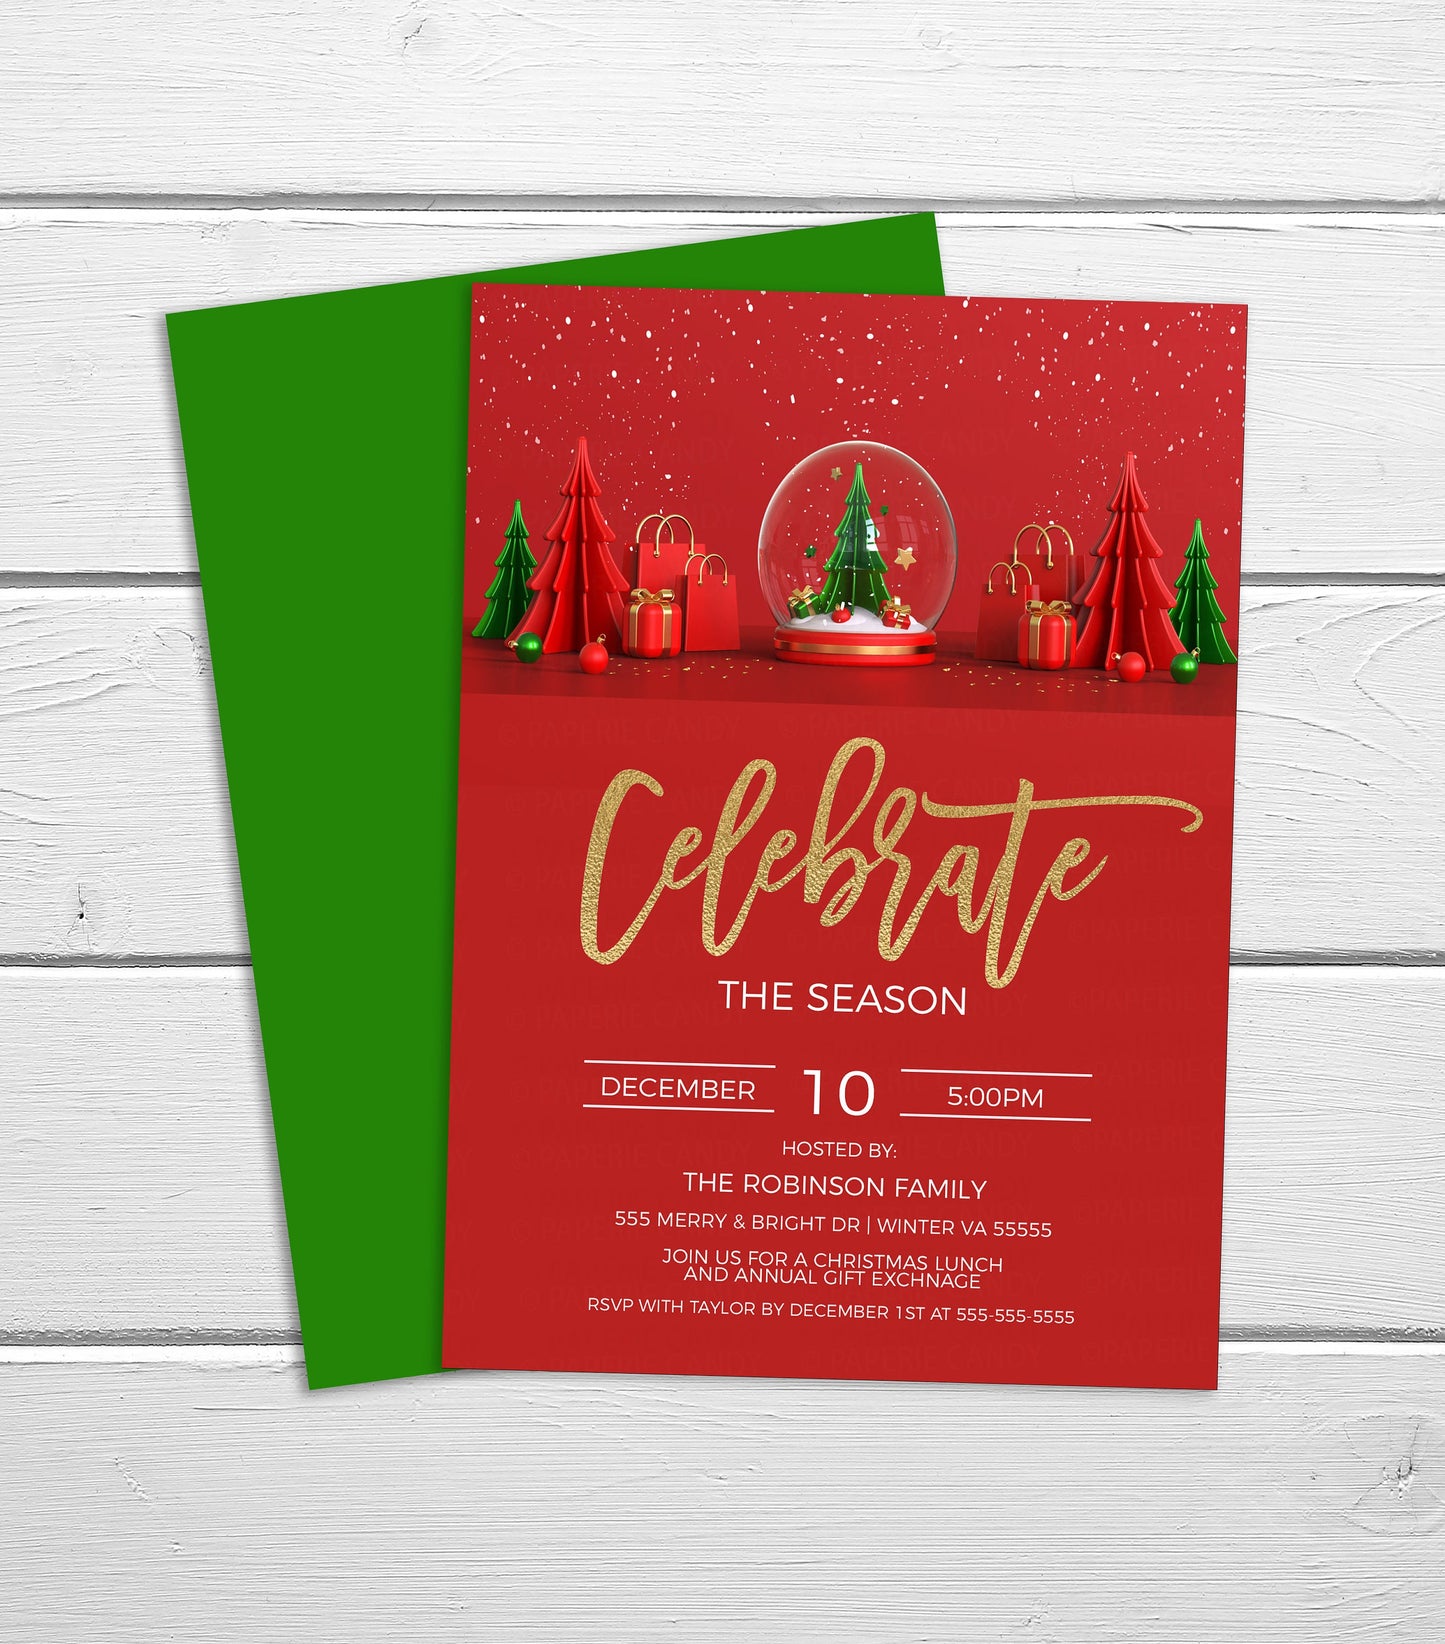 Celebrate The Season Party Invitation, Christmas Celebration Invite, Company Party, Lunch Luncheon Dinner Brunch, DIY Editable Printable